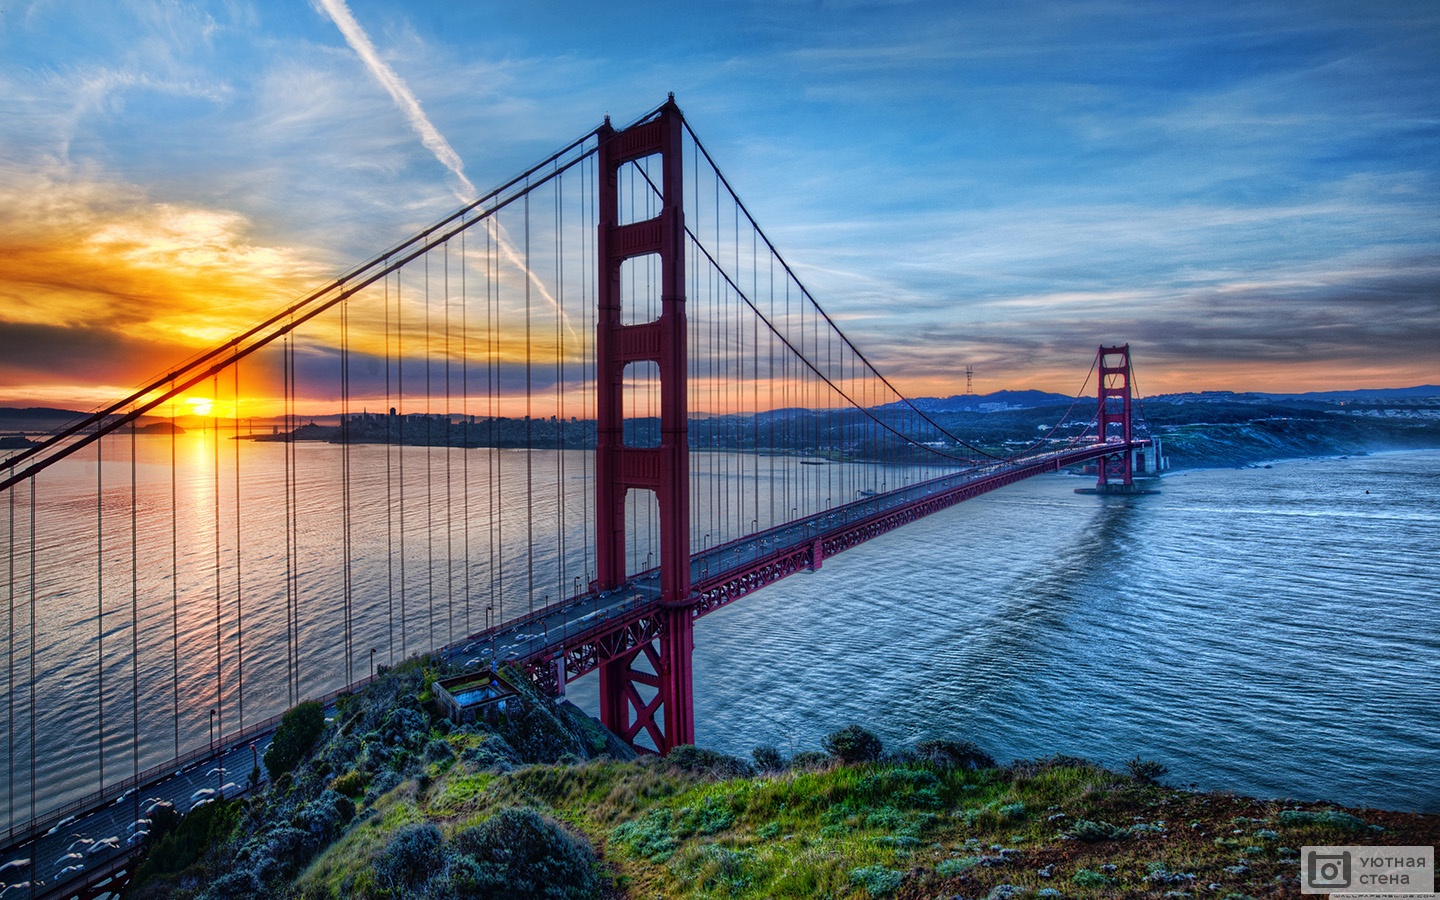 Фотообои "Вечерний вид на мост Золотые ворота, Сан-Франциско, США" - Арт. 090031